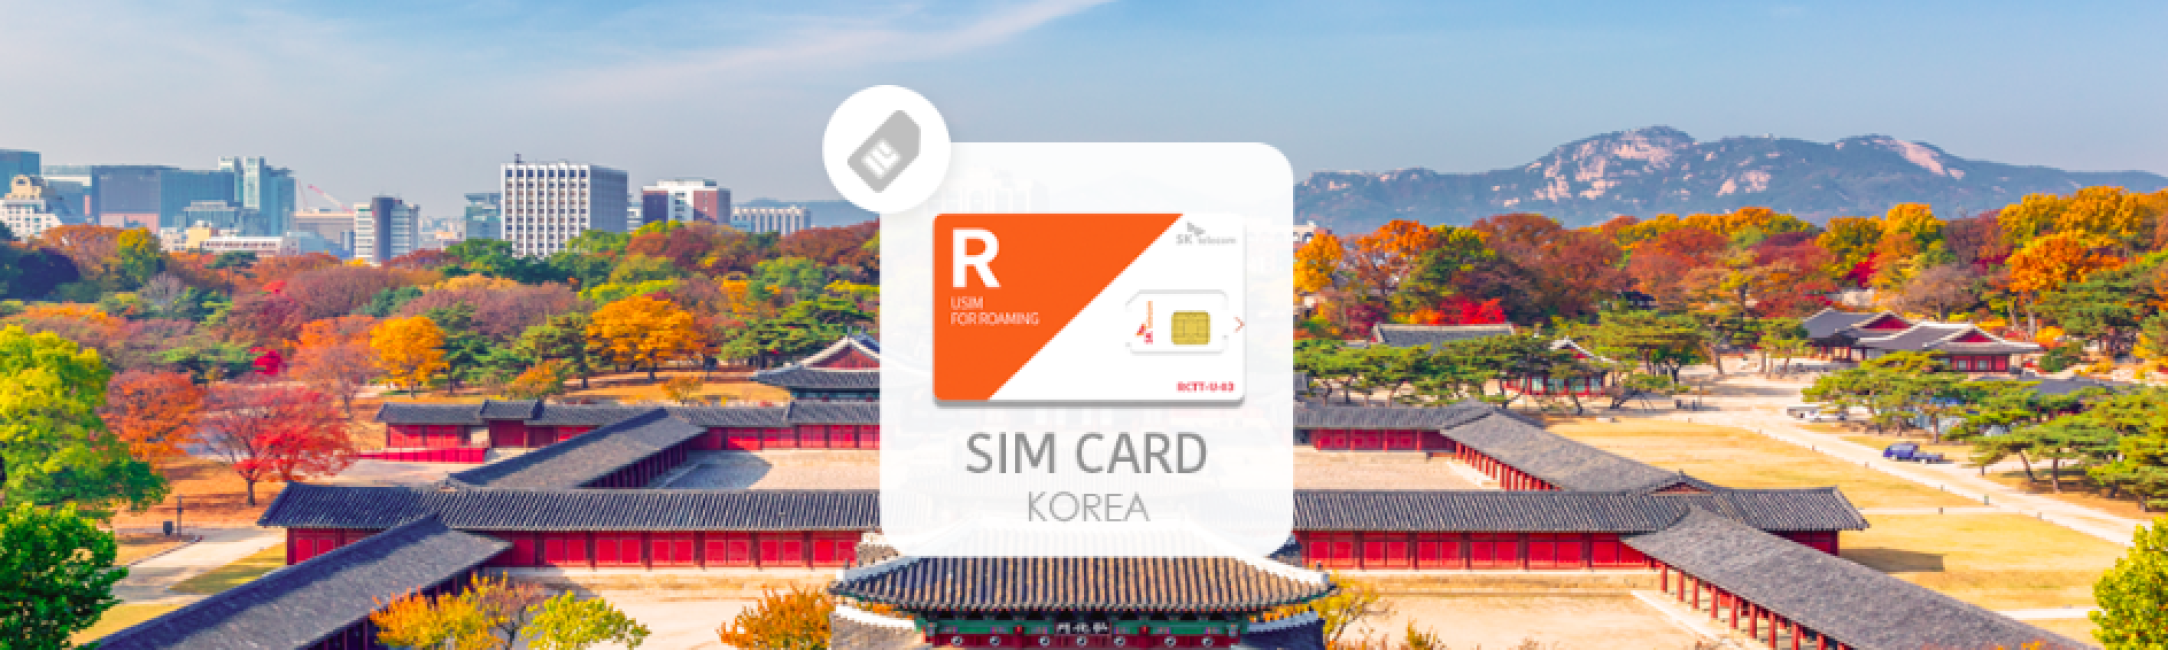 South Korea SK Telecom 4G/LTE Unlimited SIM Card Free cancellation